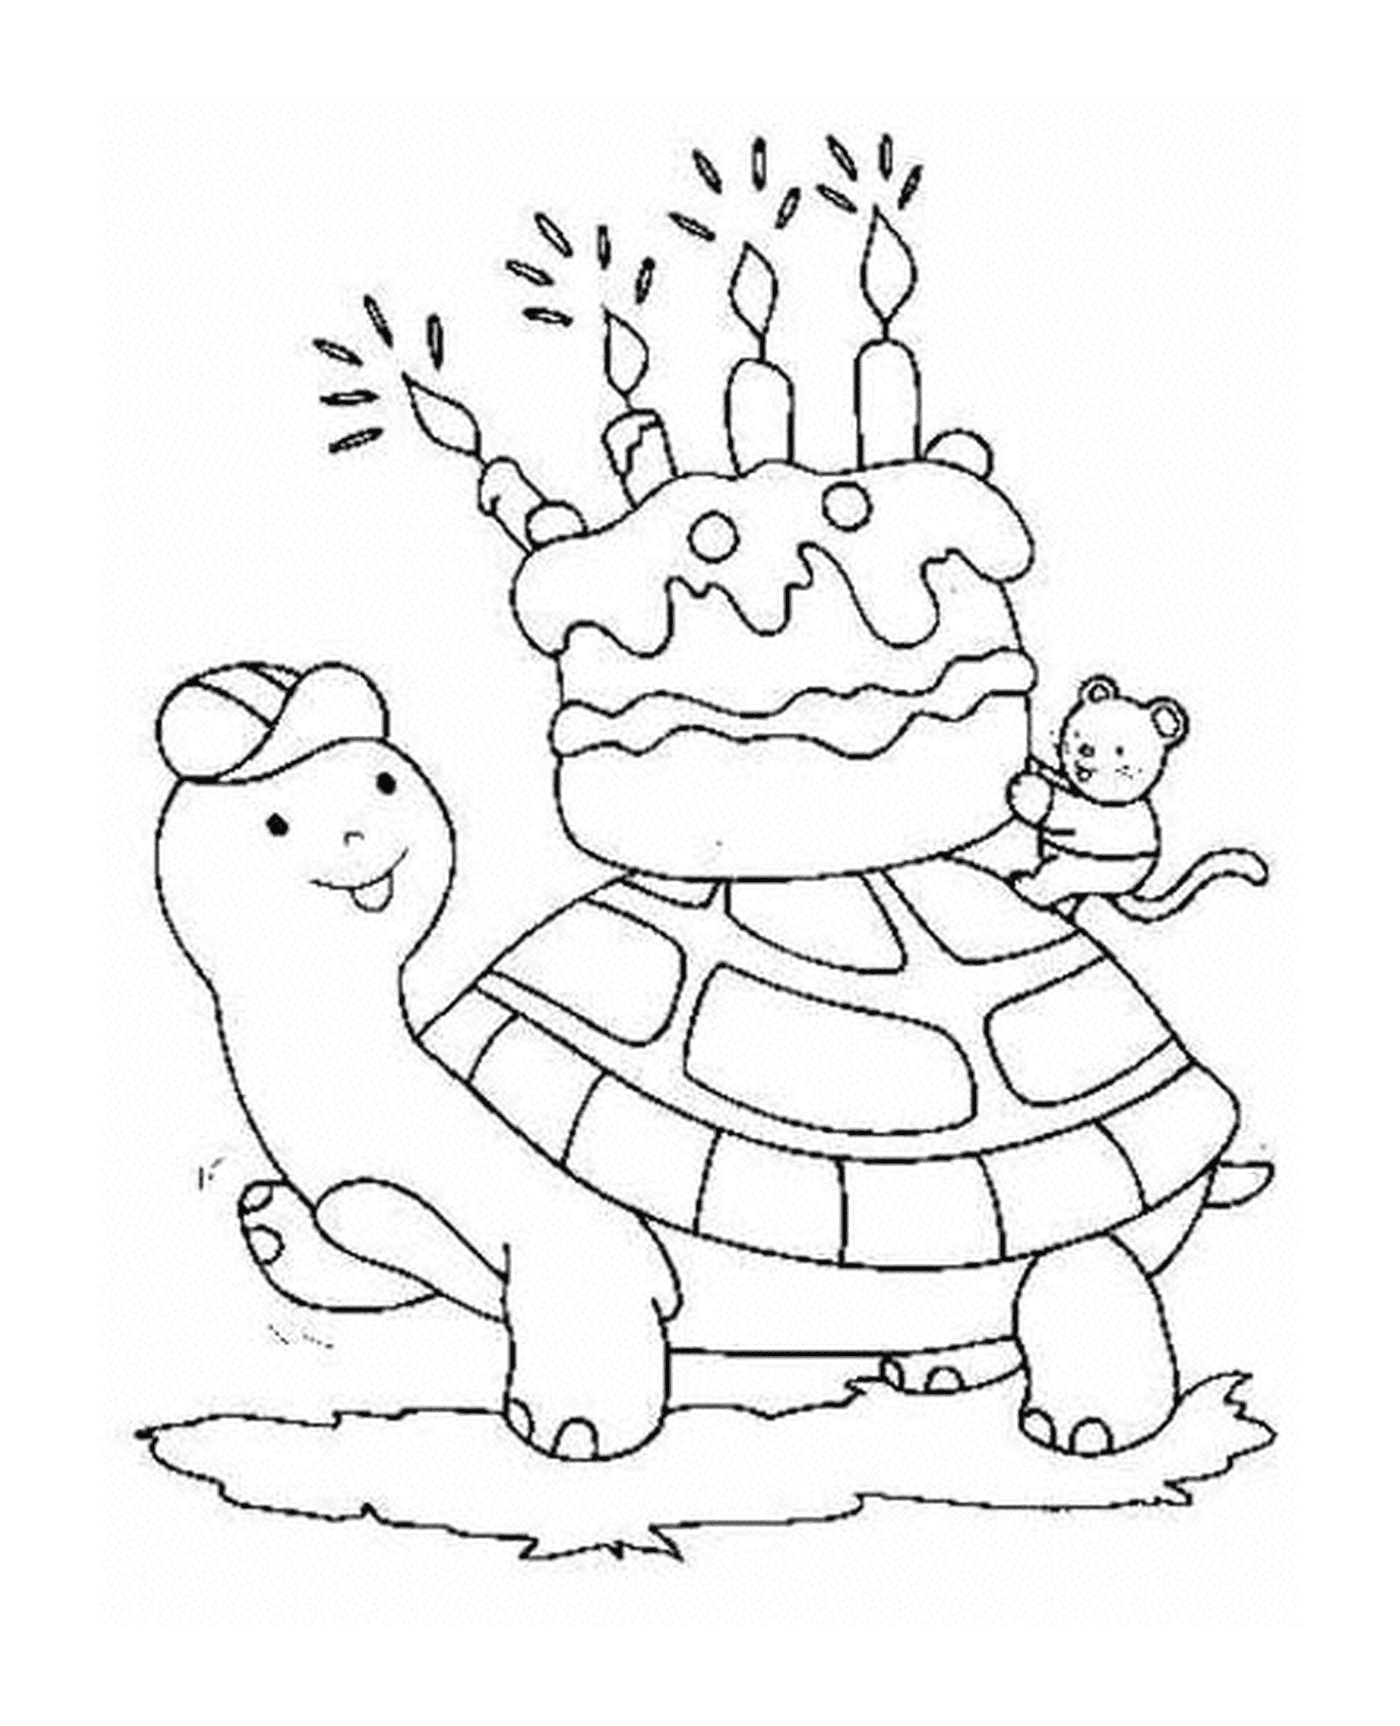  Turtle wears a birthday cake 